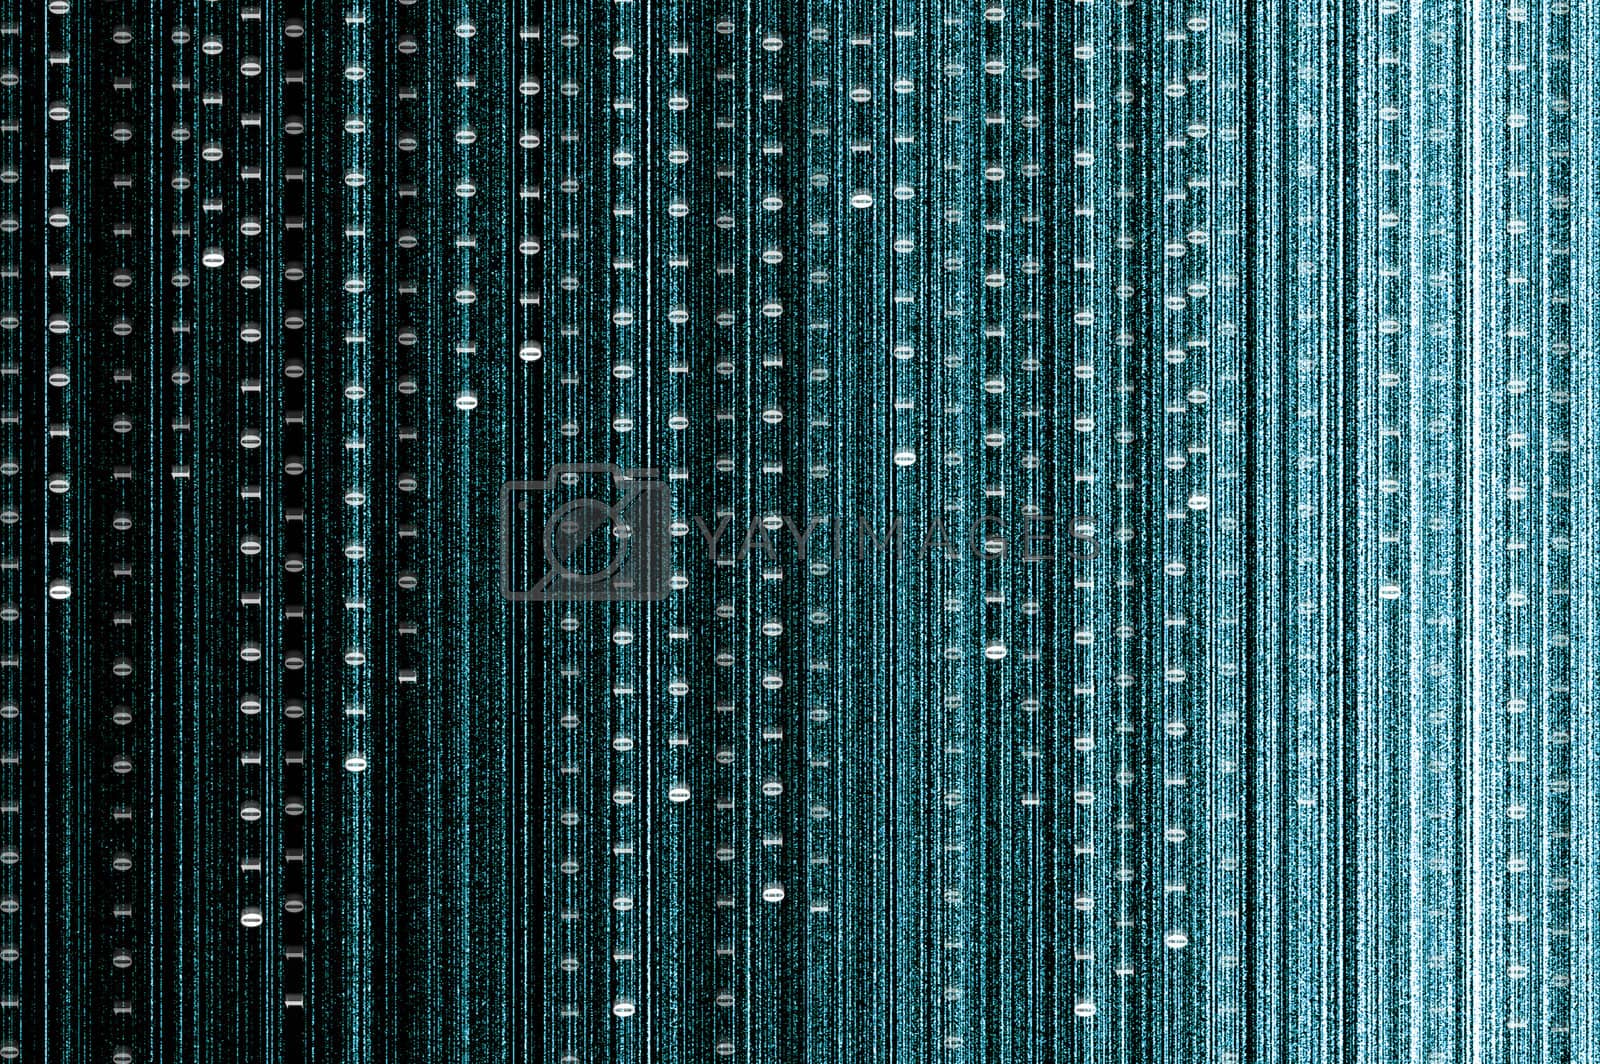 Royalty free image of bluen matrix background by anankkml